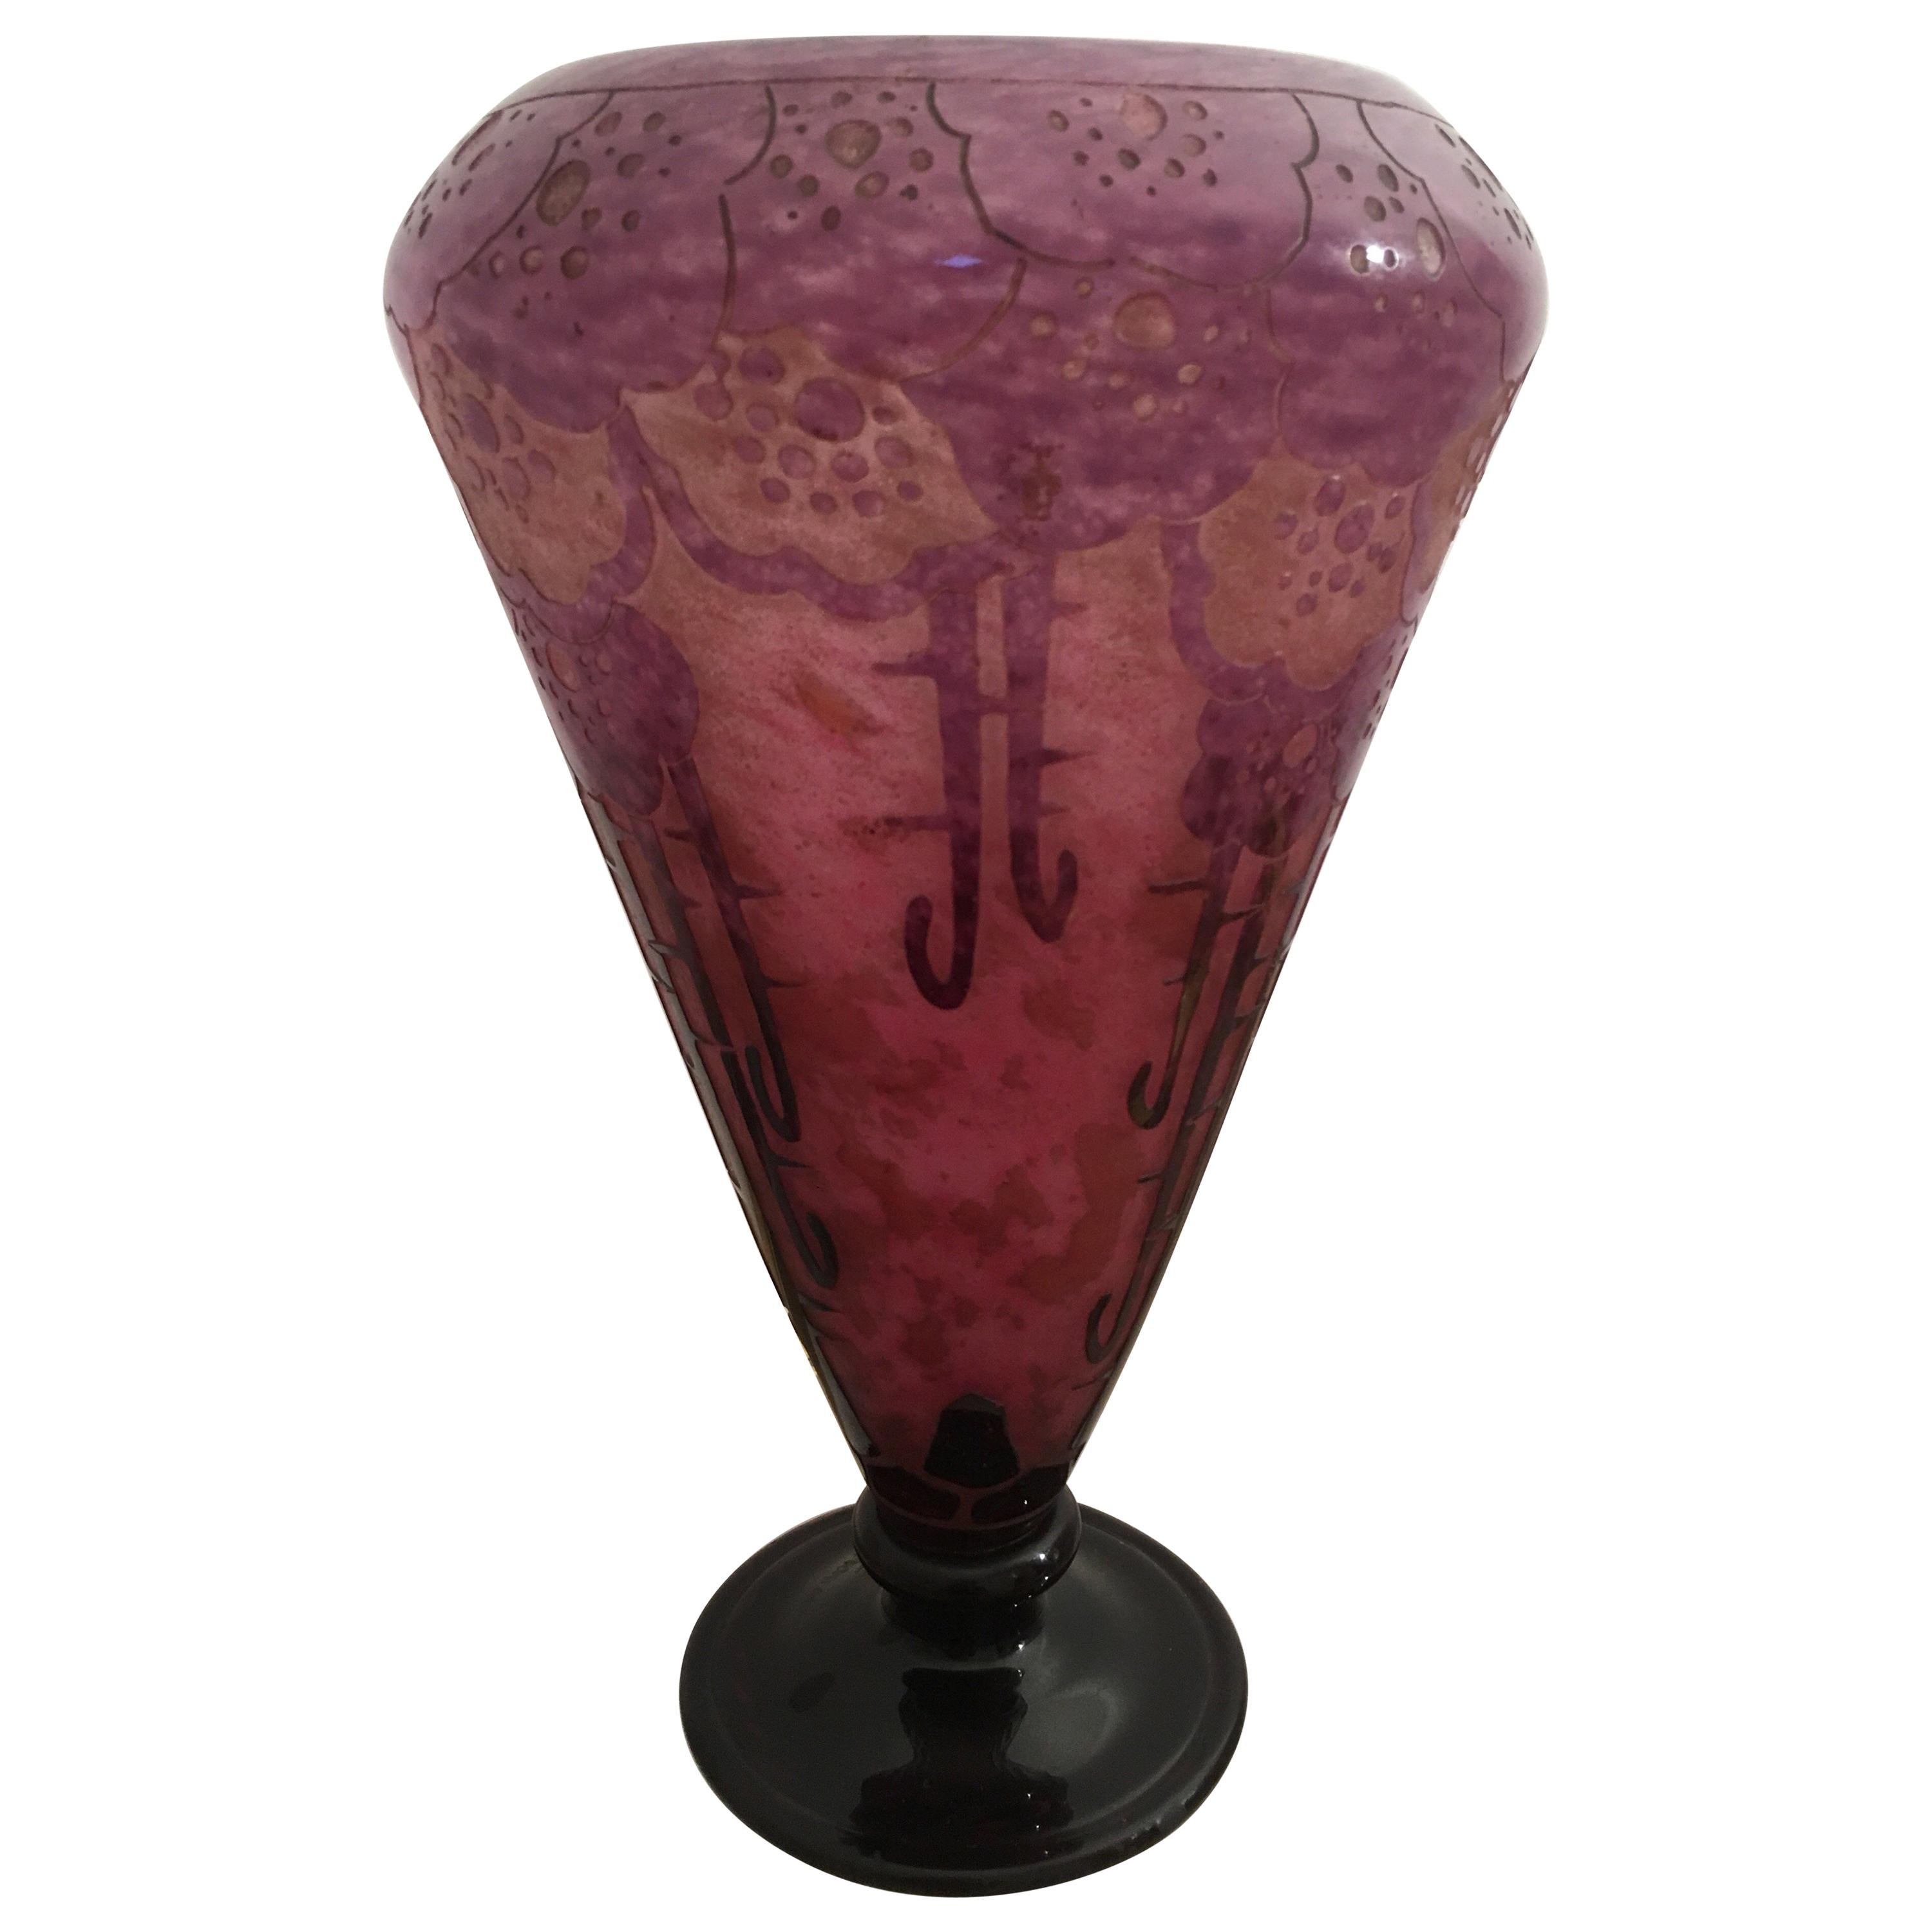 Charles Schneider French Art Deco Glass Vase, Le Verre Francais Charder Signed For Sale